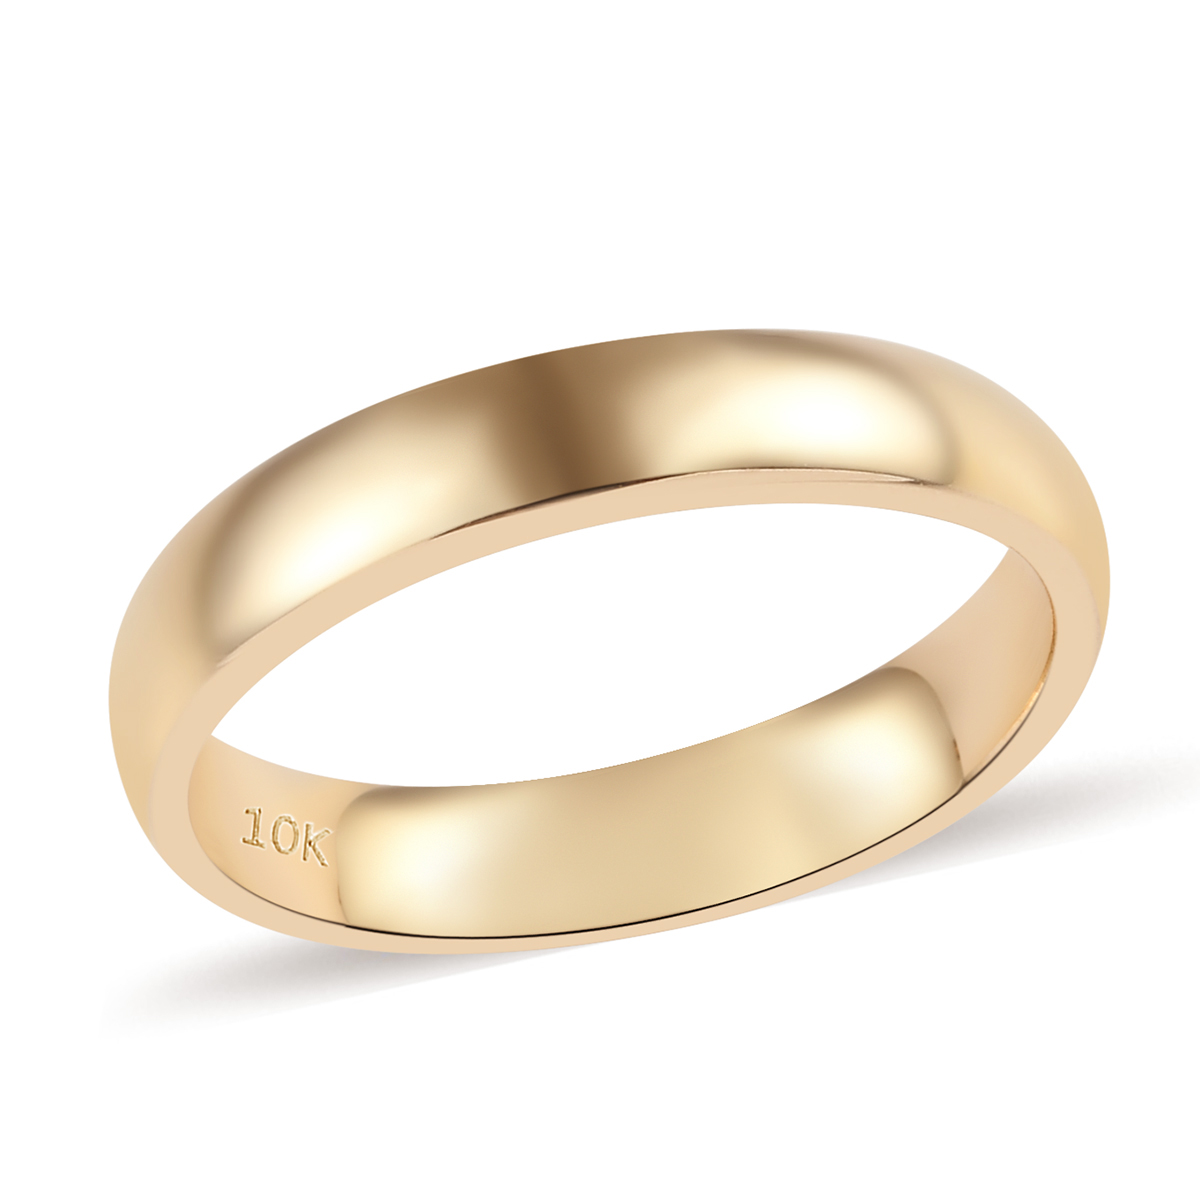 LUXORO 10K Yellow Gold Band Ring 3.85 Grams